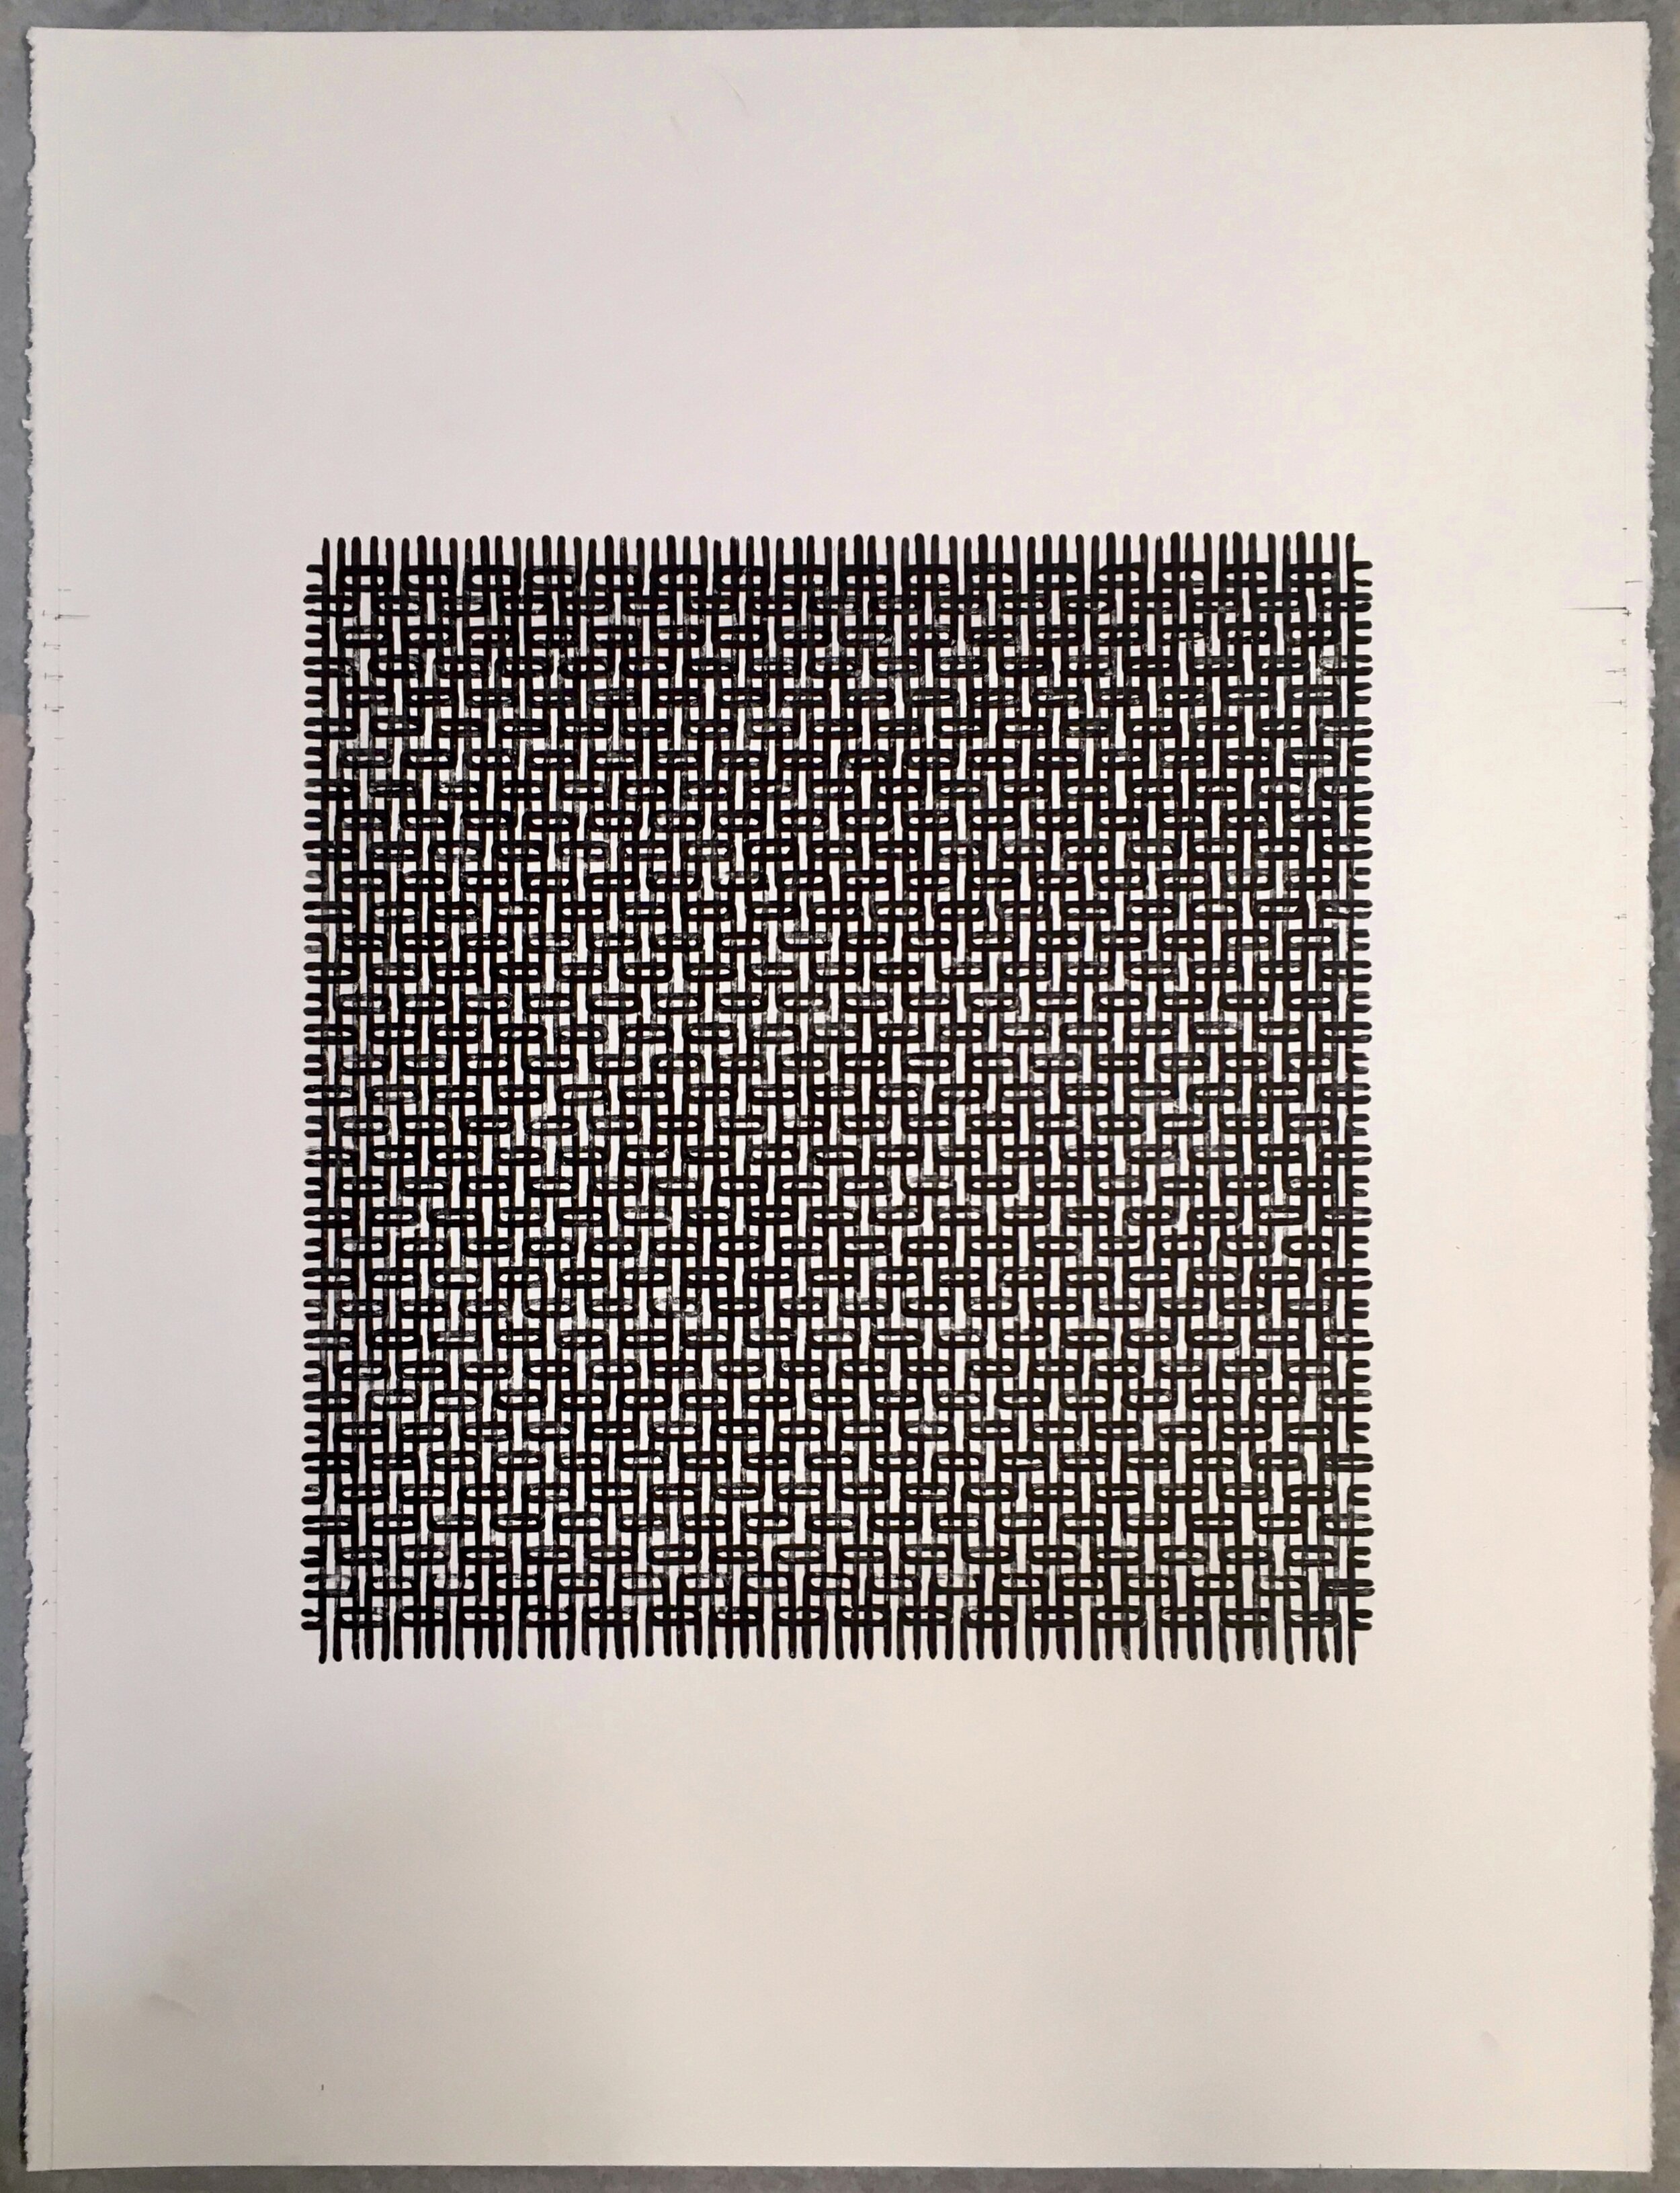  Benjamin Gallagher  63 Whalebone Court,  2020 soot on paper Artwork H 40.5cm x W 38cm Paper H 76cm x W 56.5cm 